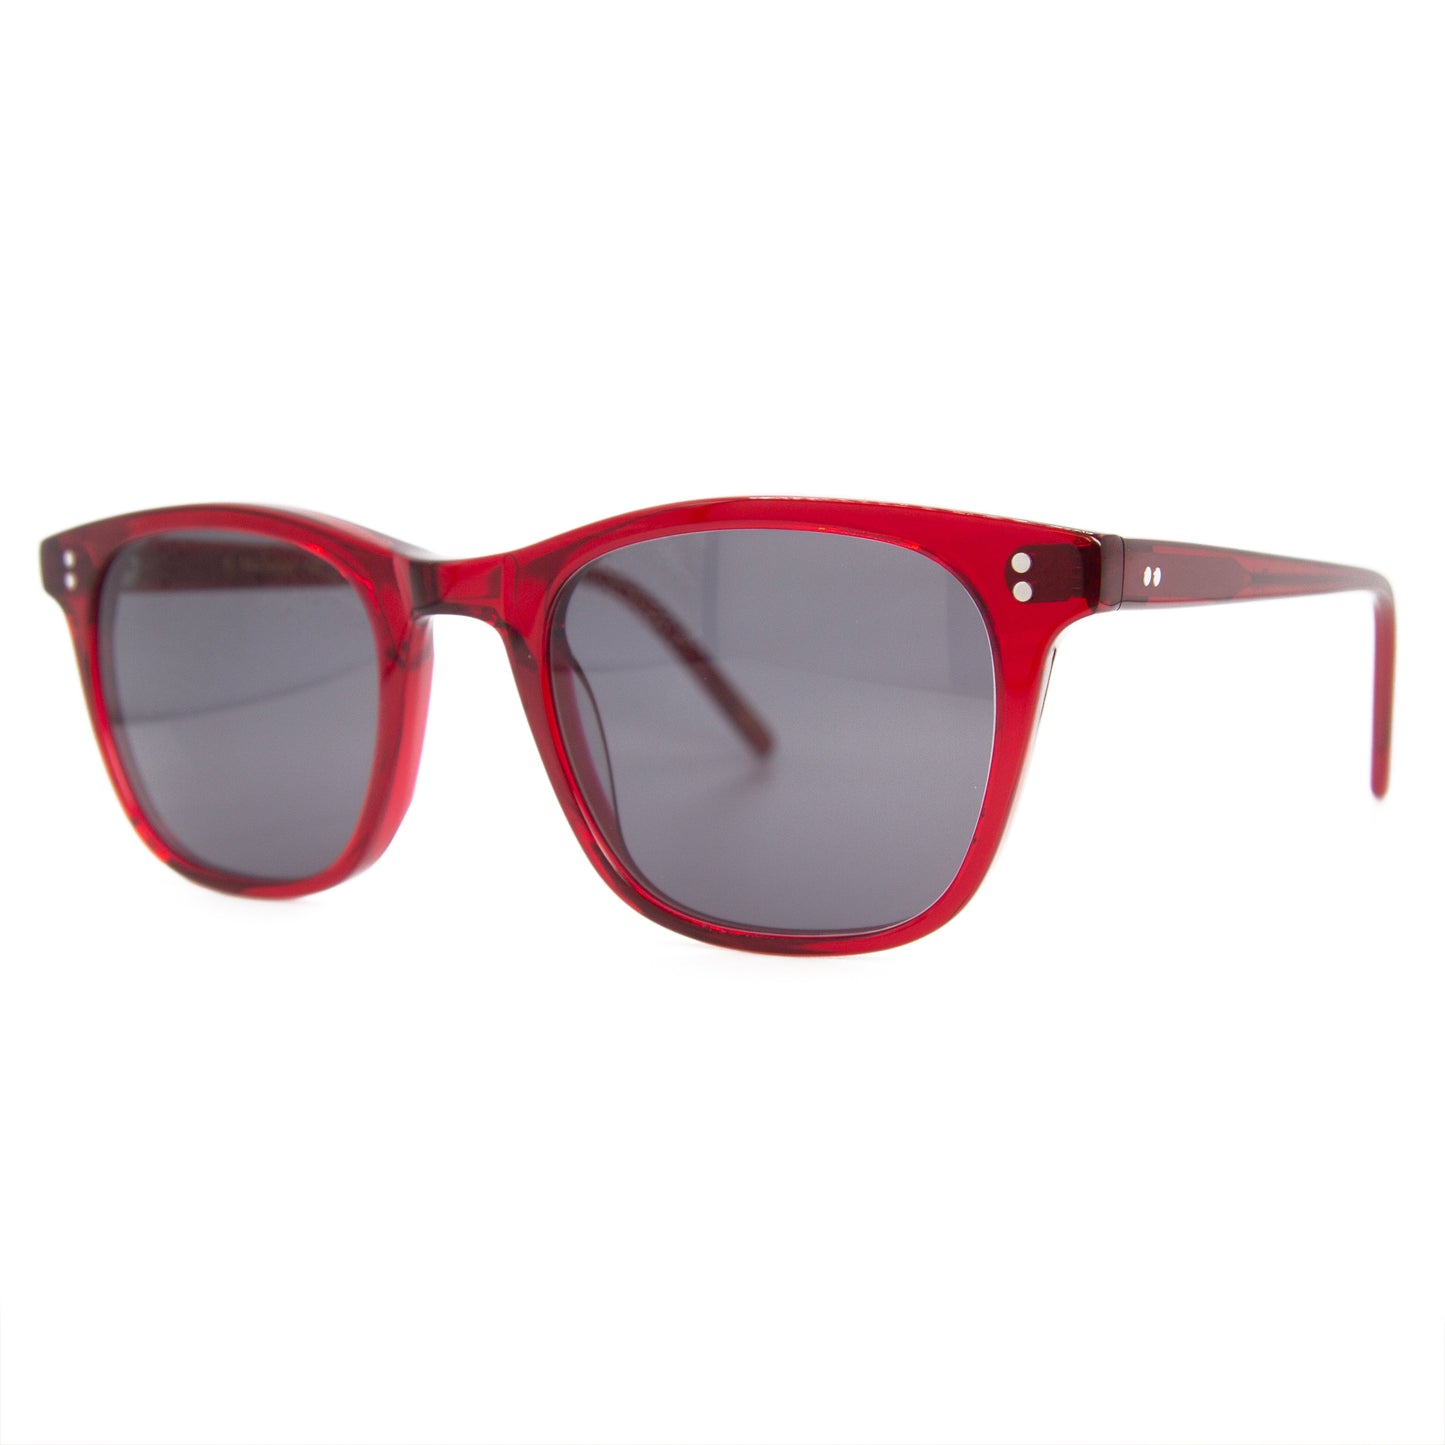 Soft Square Red Sunglasses